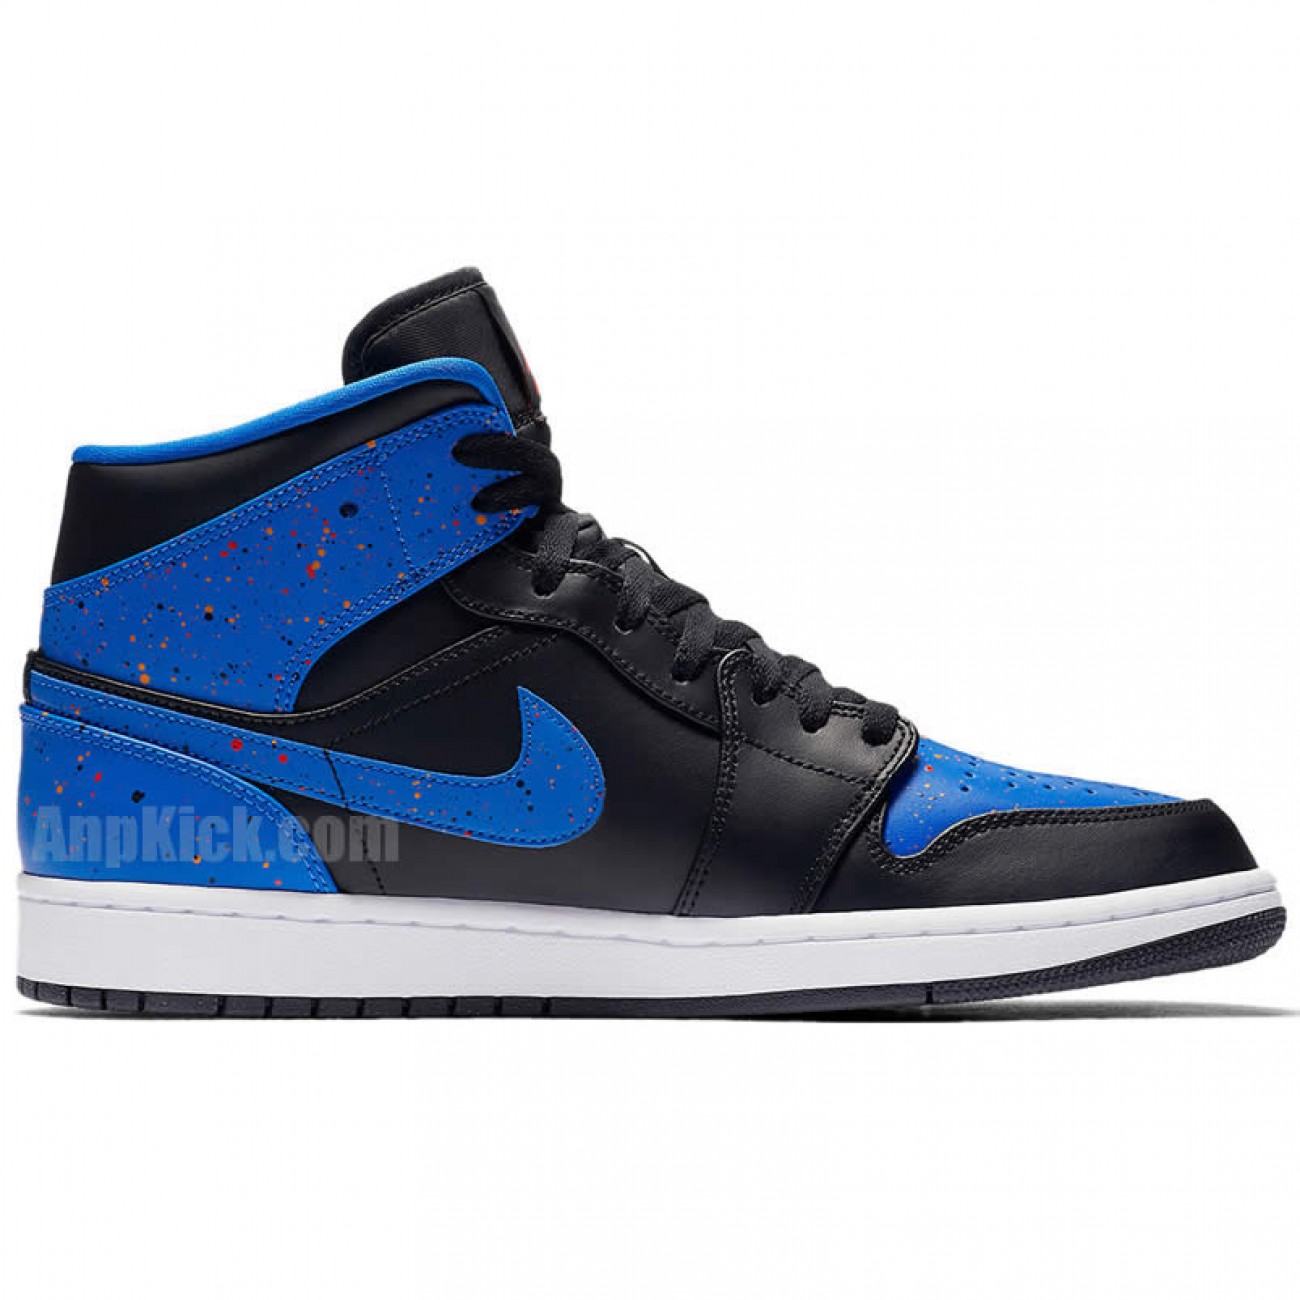 Air Jordan 1 Mid "Royal Blue" Paint Splatter Shoes 554724-048